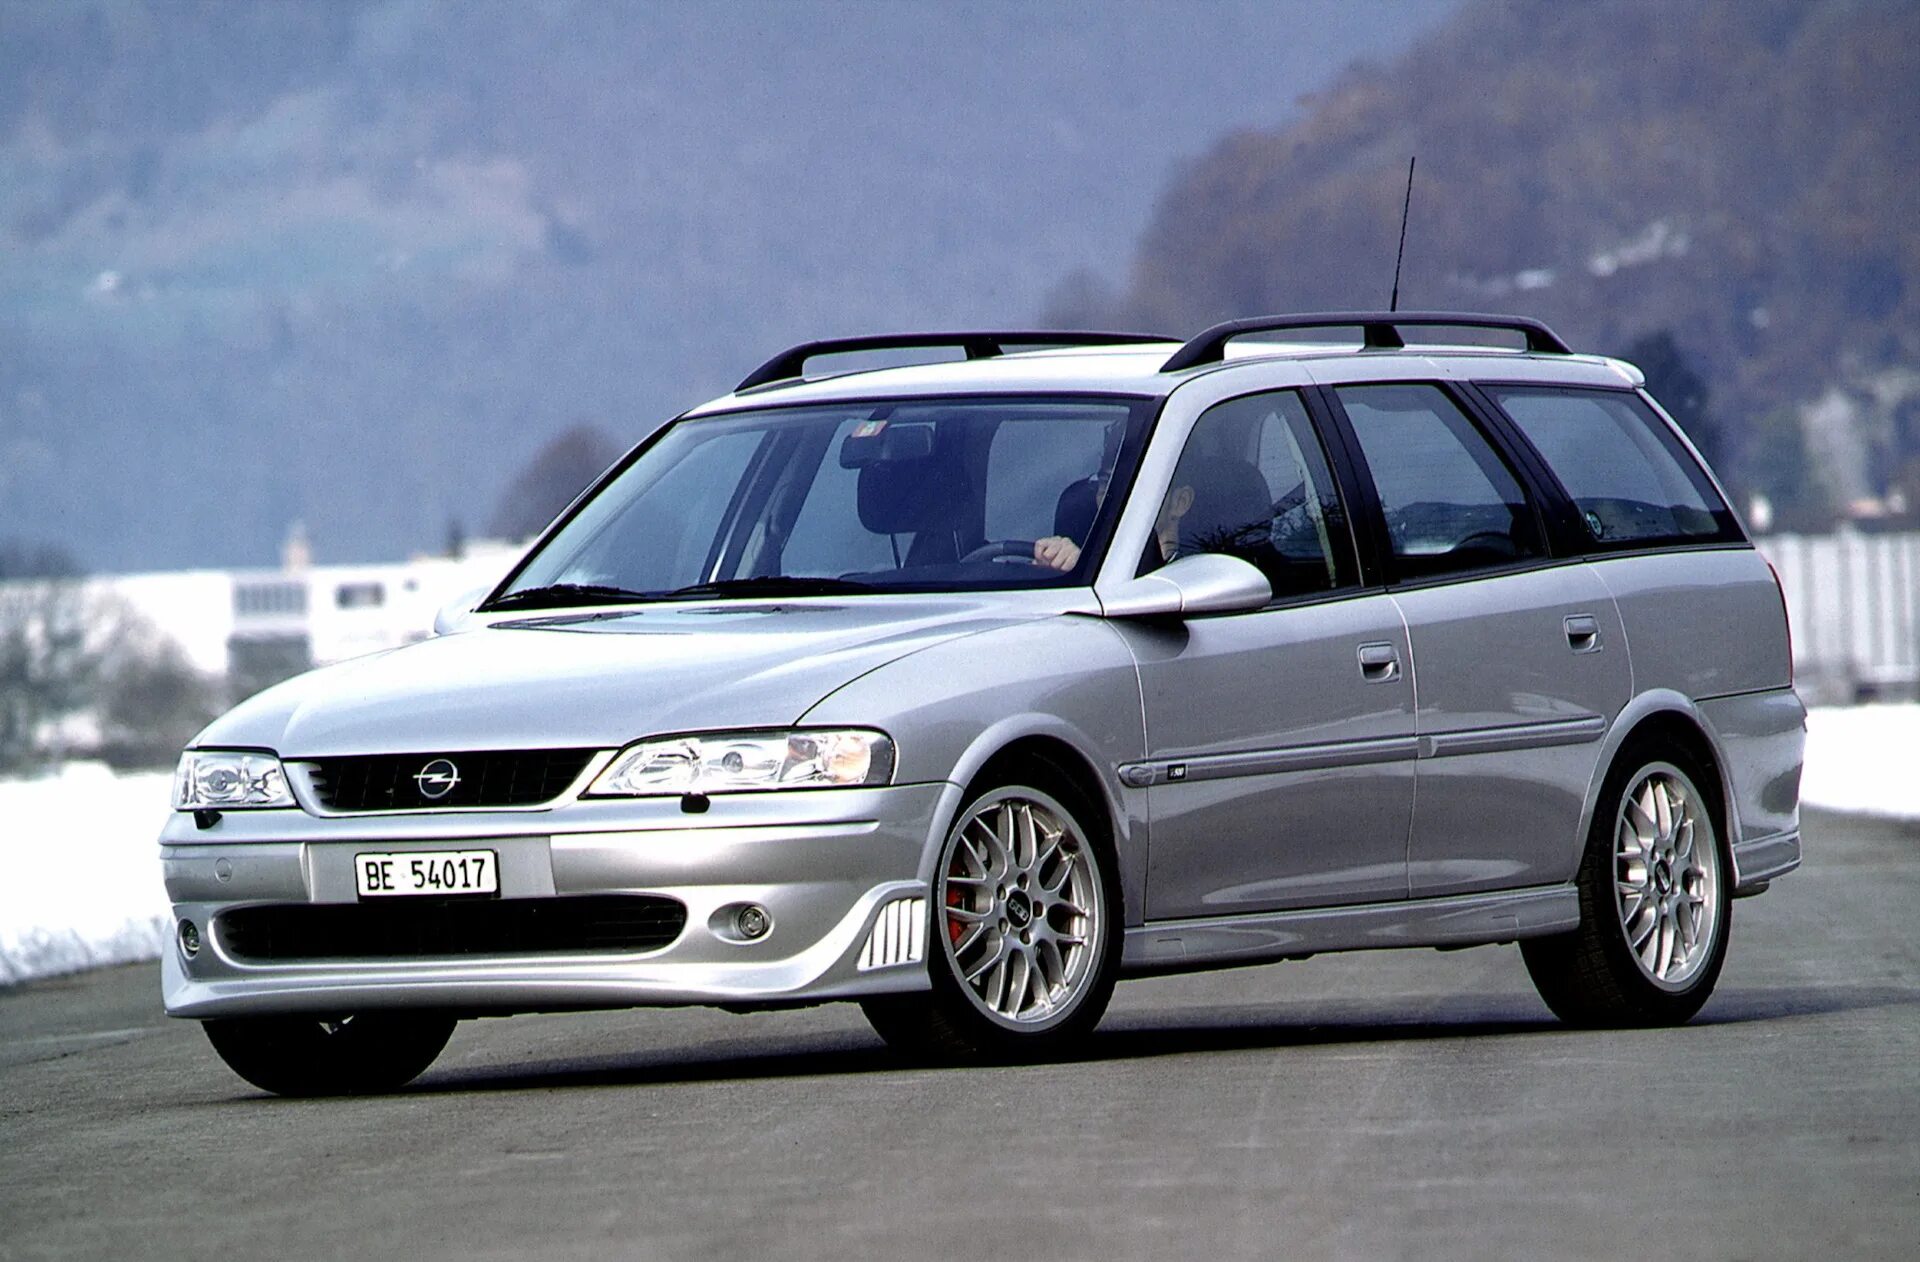 Opel Vectra b универсал 1999. Opel Vectra 2000 универсал. Opel Vectra b универсал 2002. Opel Vectra b Caravan i500. Вектра караван